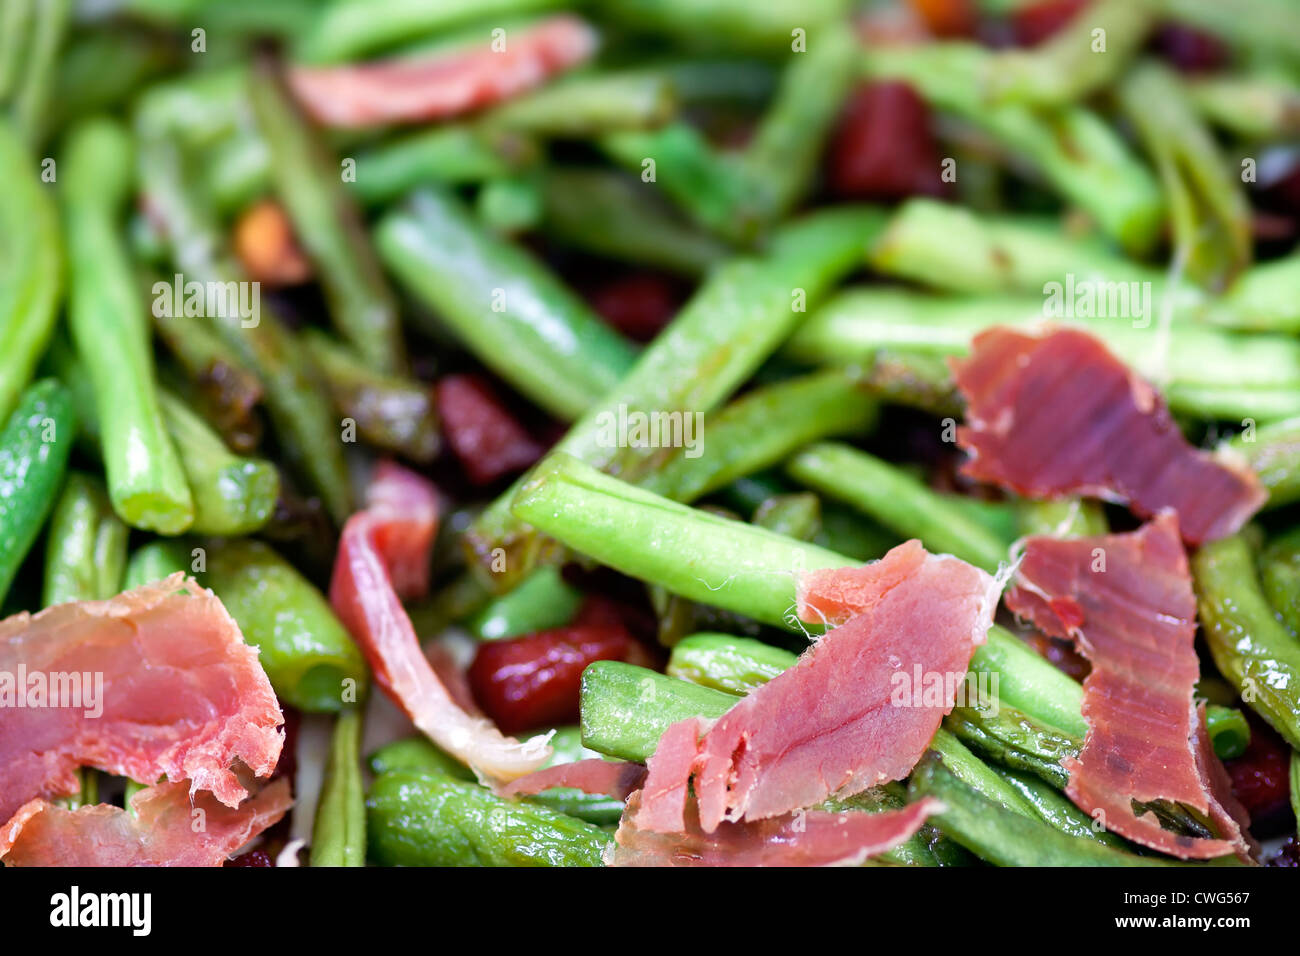 Salad - fried green beans with Serrano ham - Spanish cuisine Stock Photo